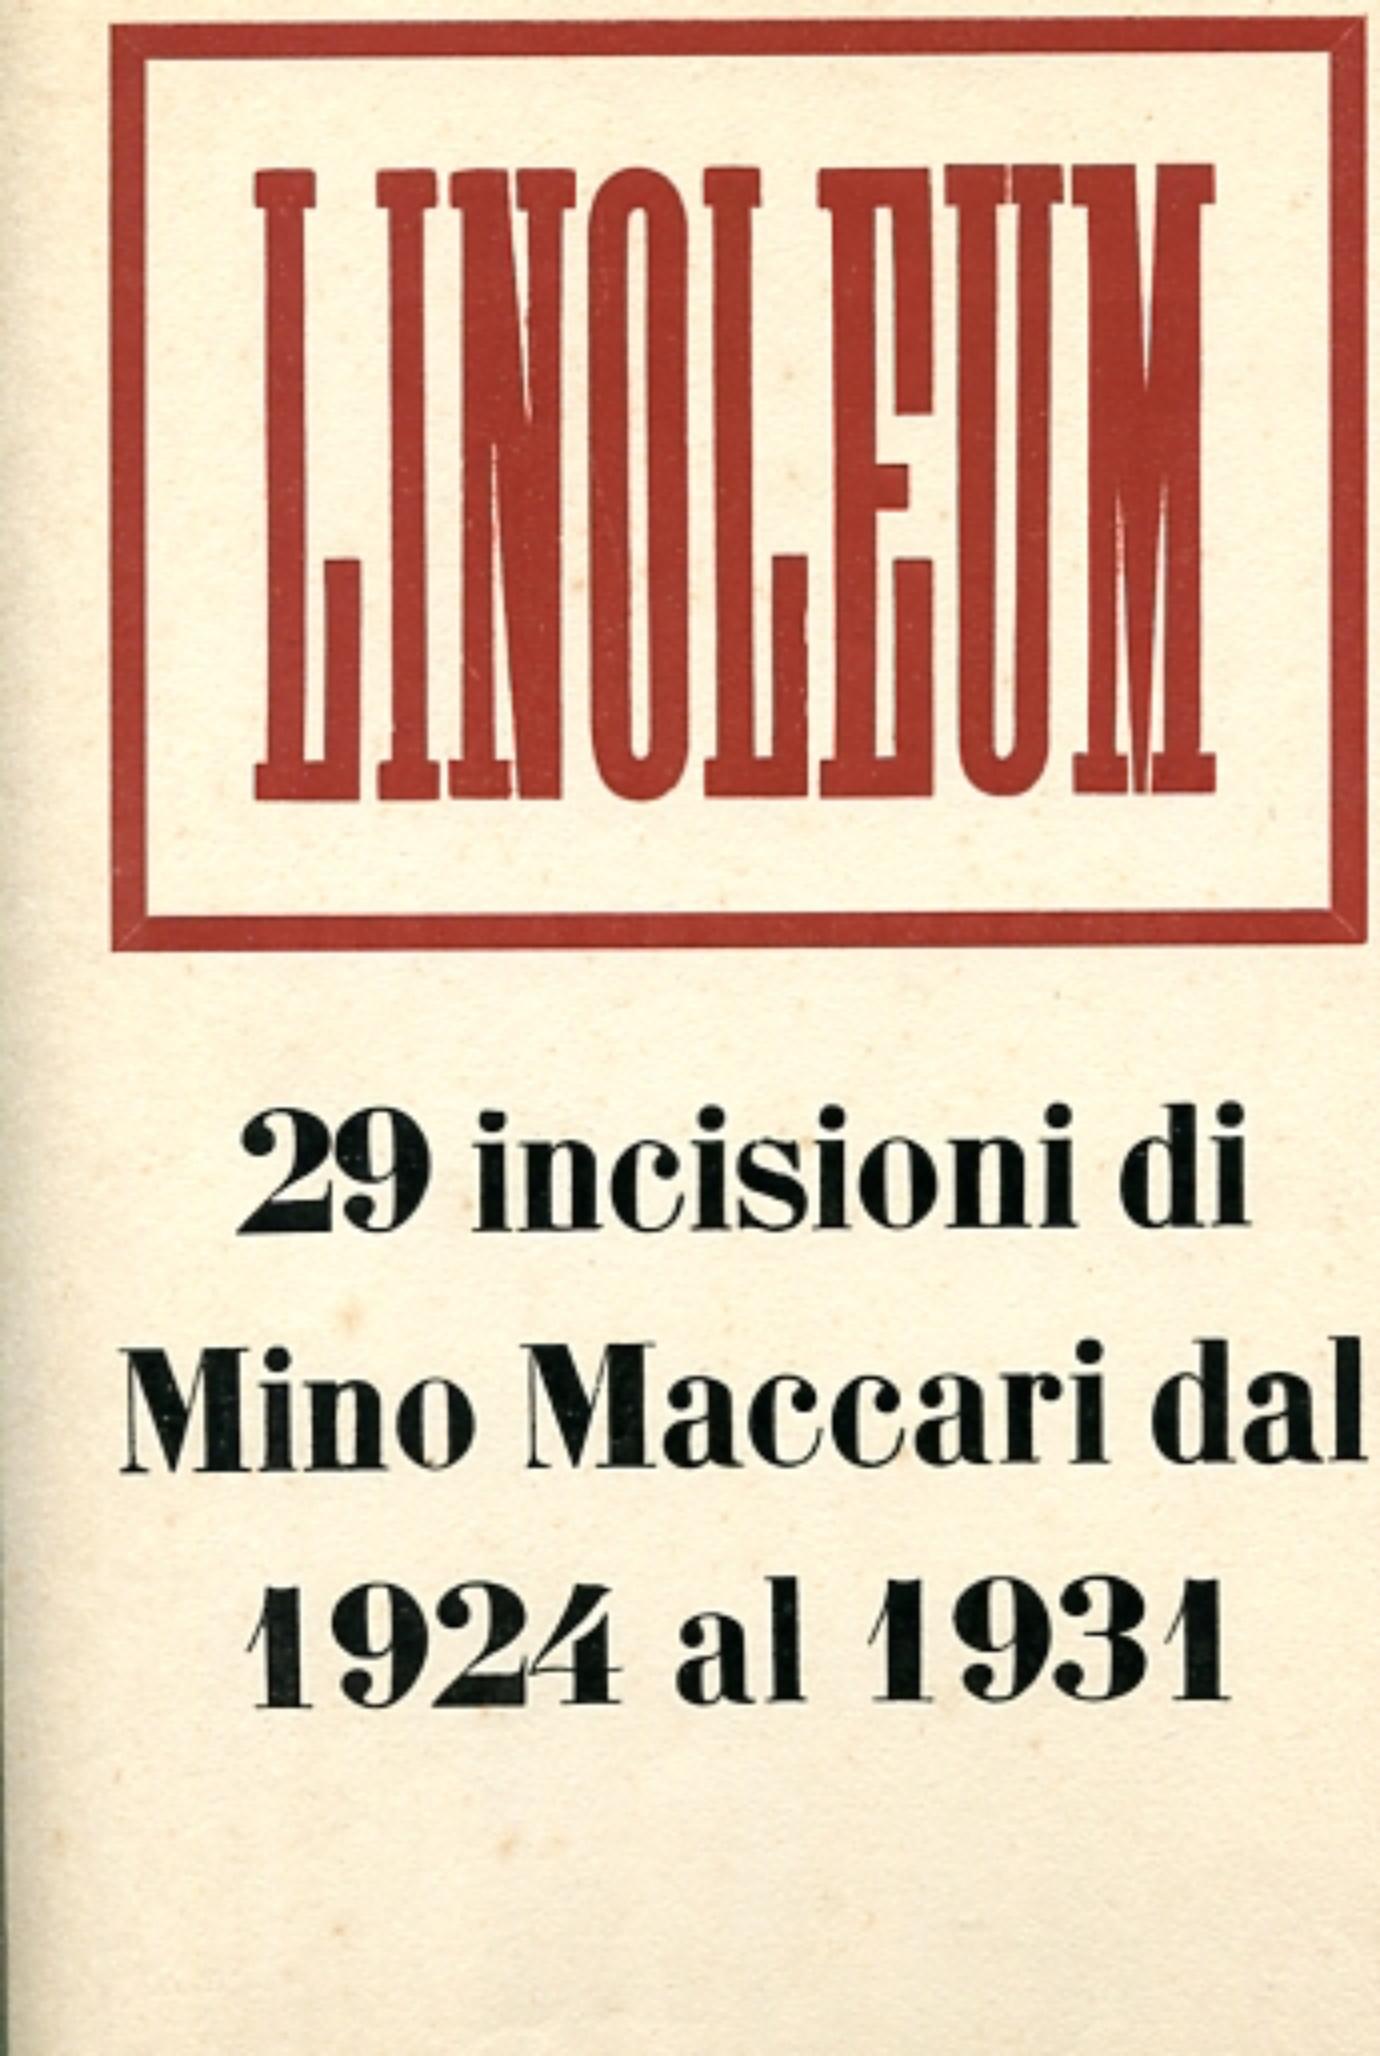 Linoleum - Rare Illustrated Book by Mino Maccari - 1931